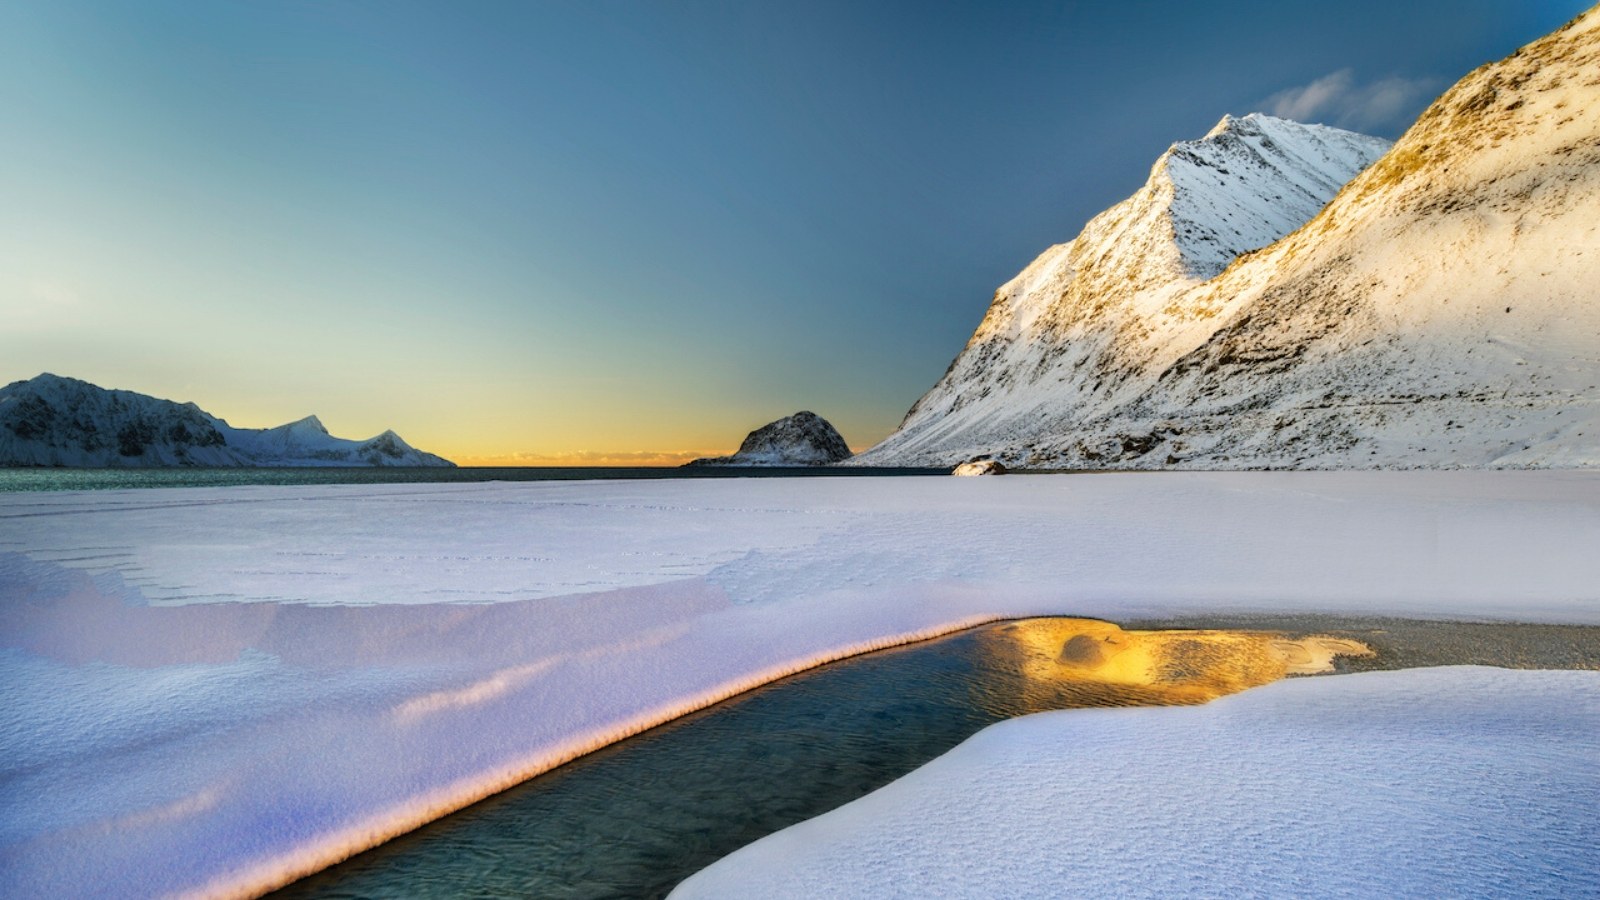 Lofoten Norway Landscape Photograph captured by professional photographer Ignacio Palacios